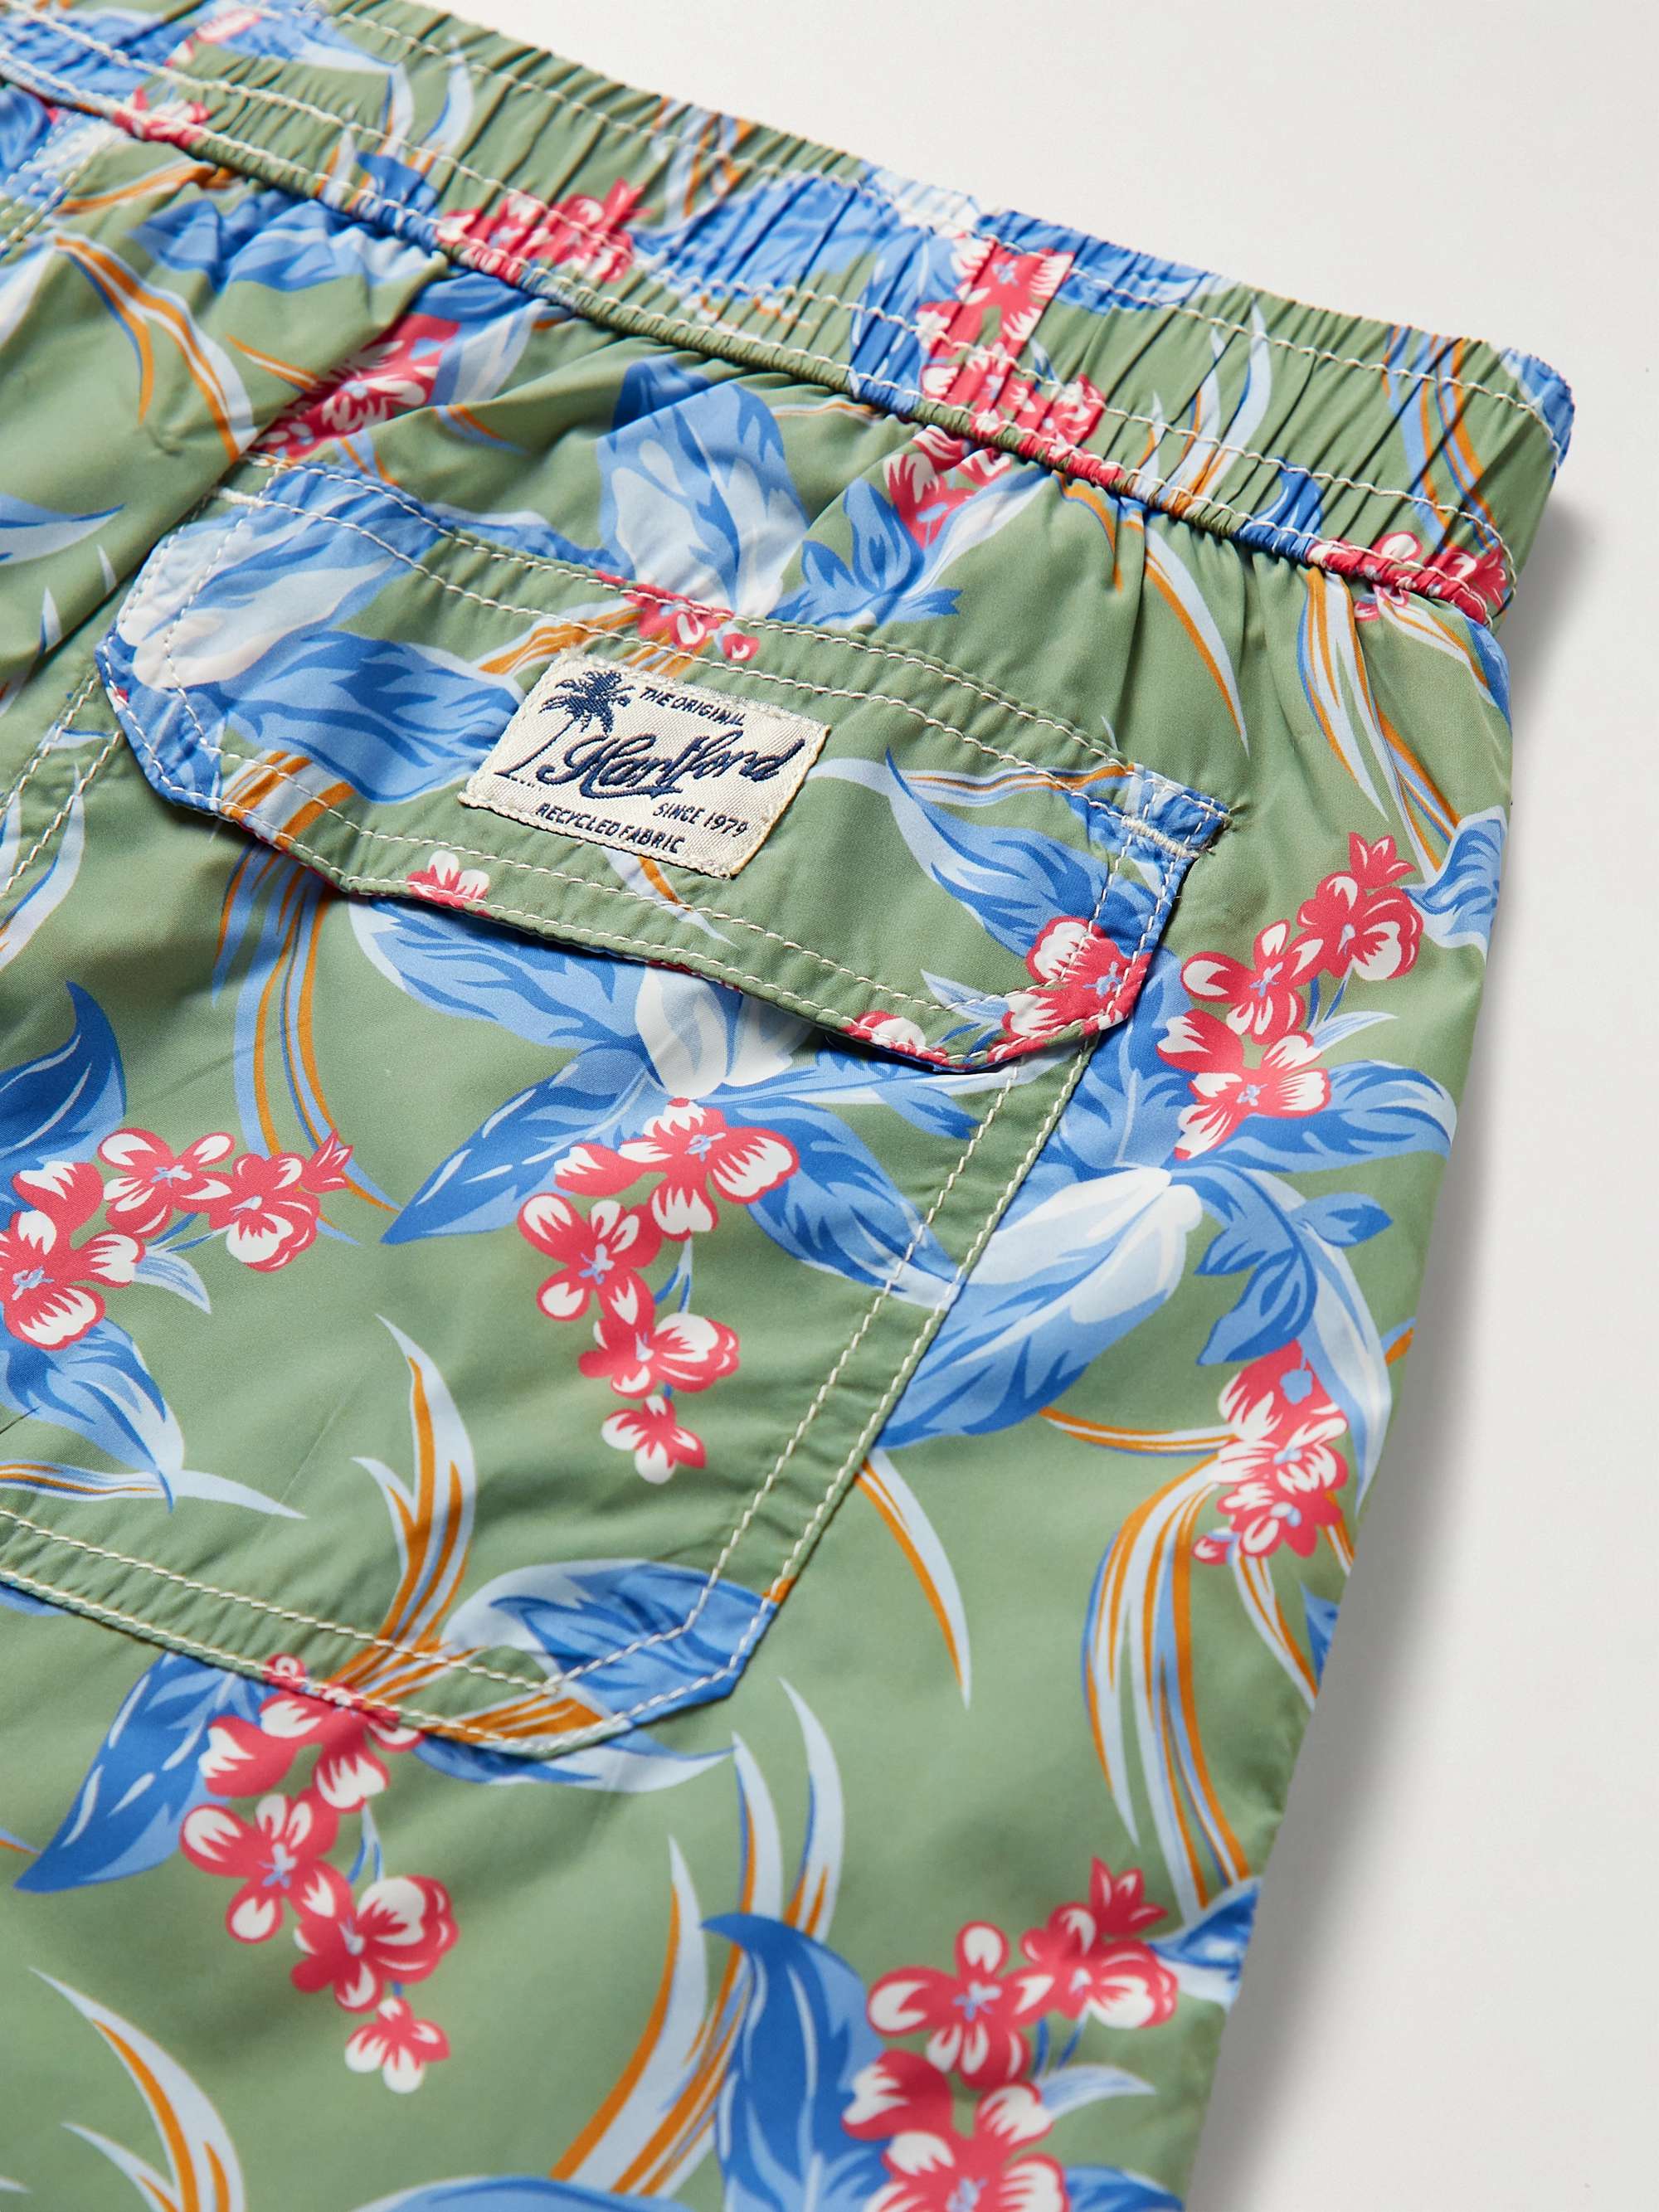 HARTFORD Mid-Length Printed Recycled Swim Shorts